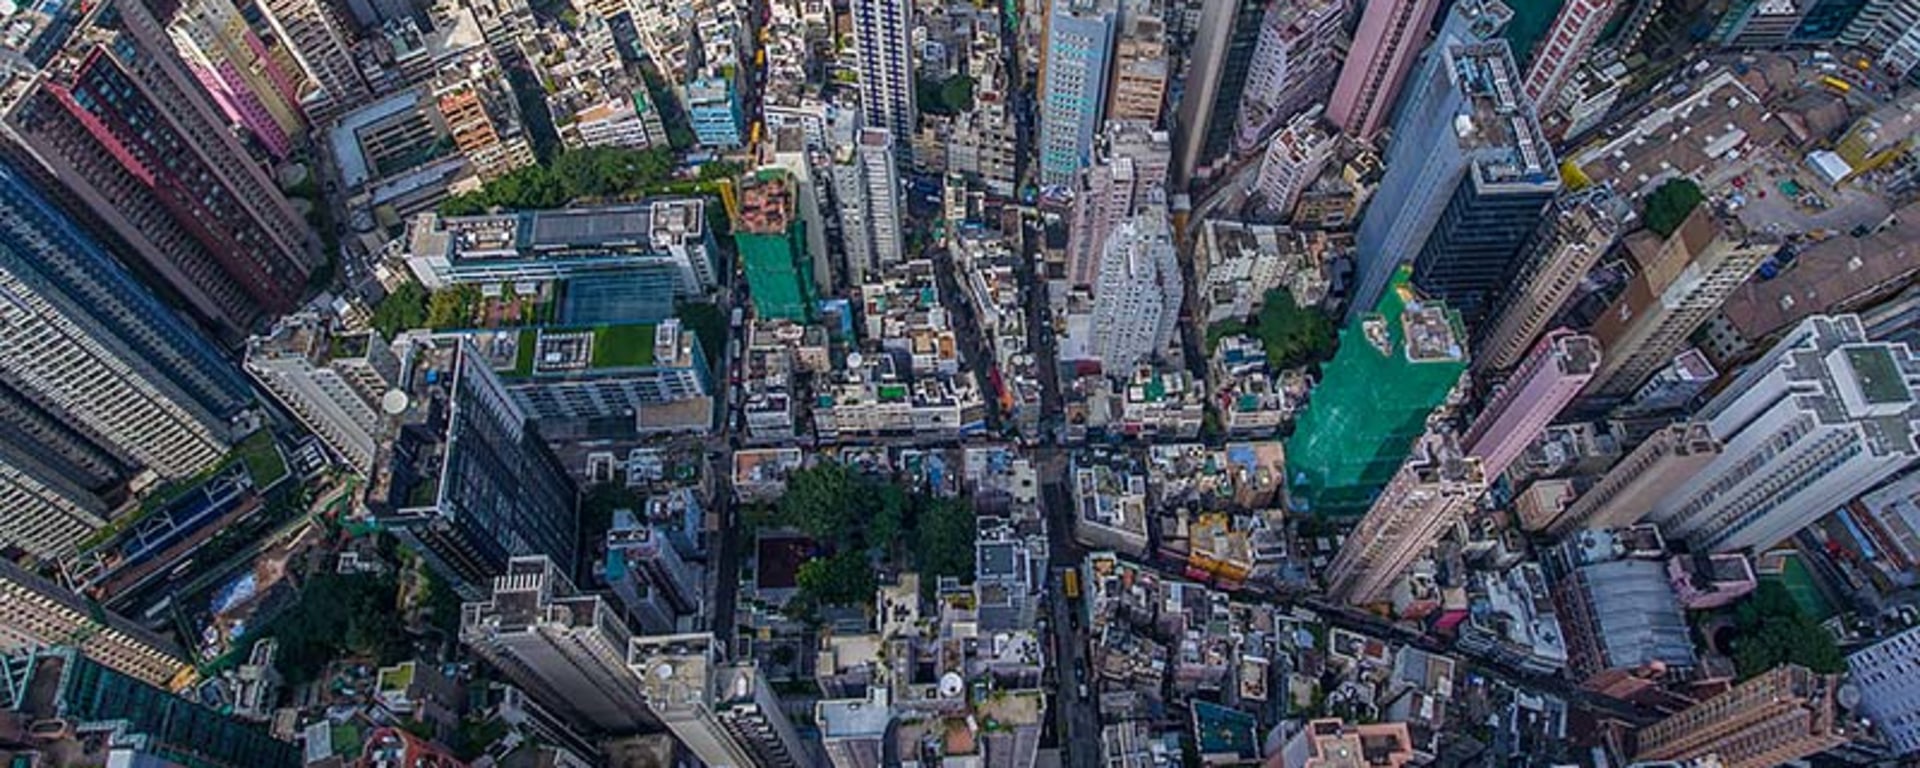 Vontobel in Hong Kong - Bird's eye view of the city